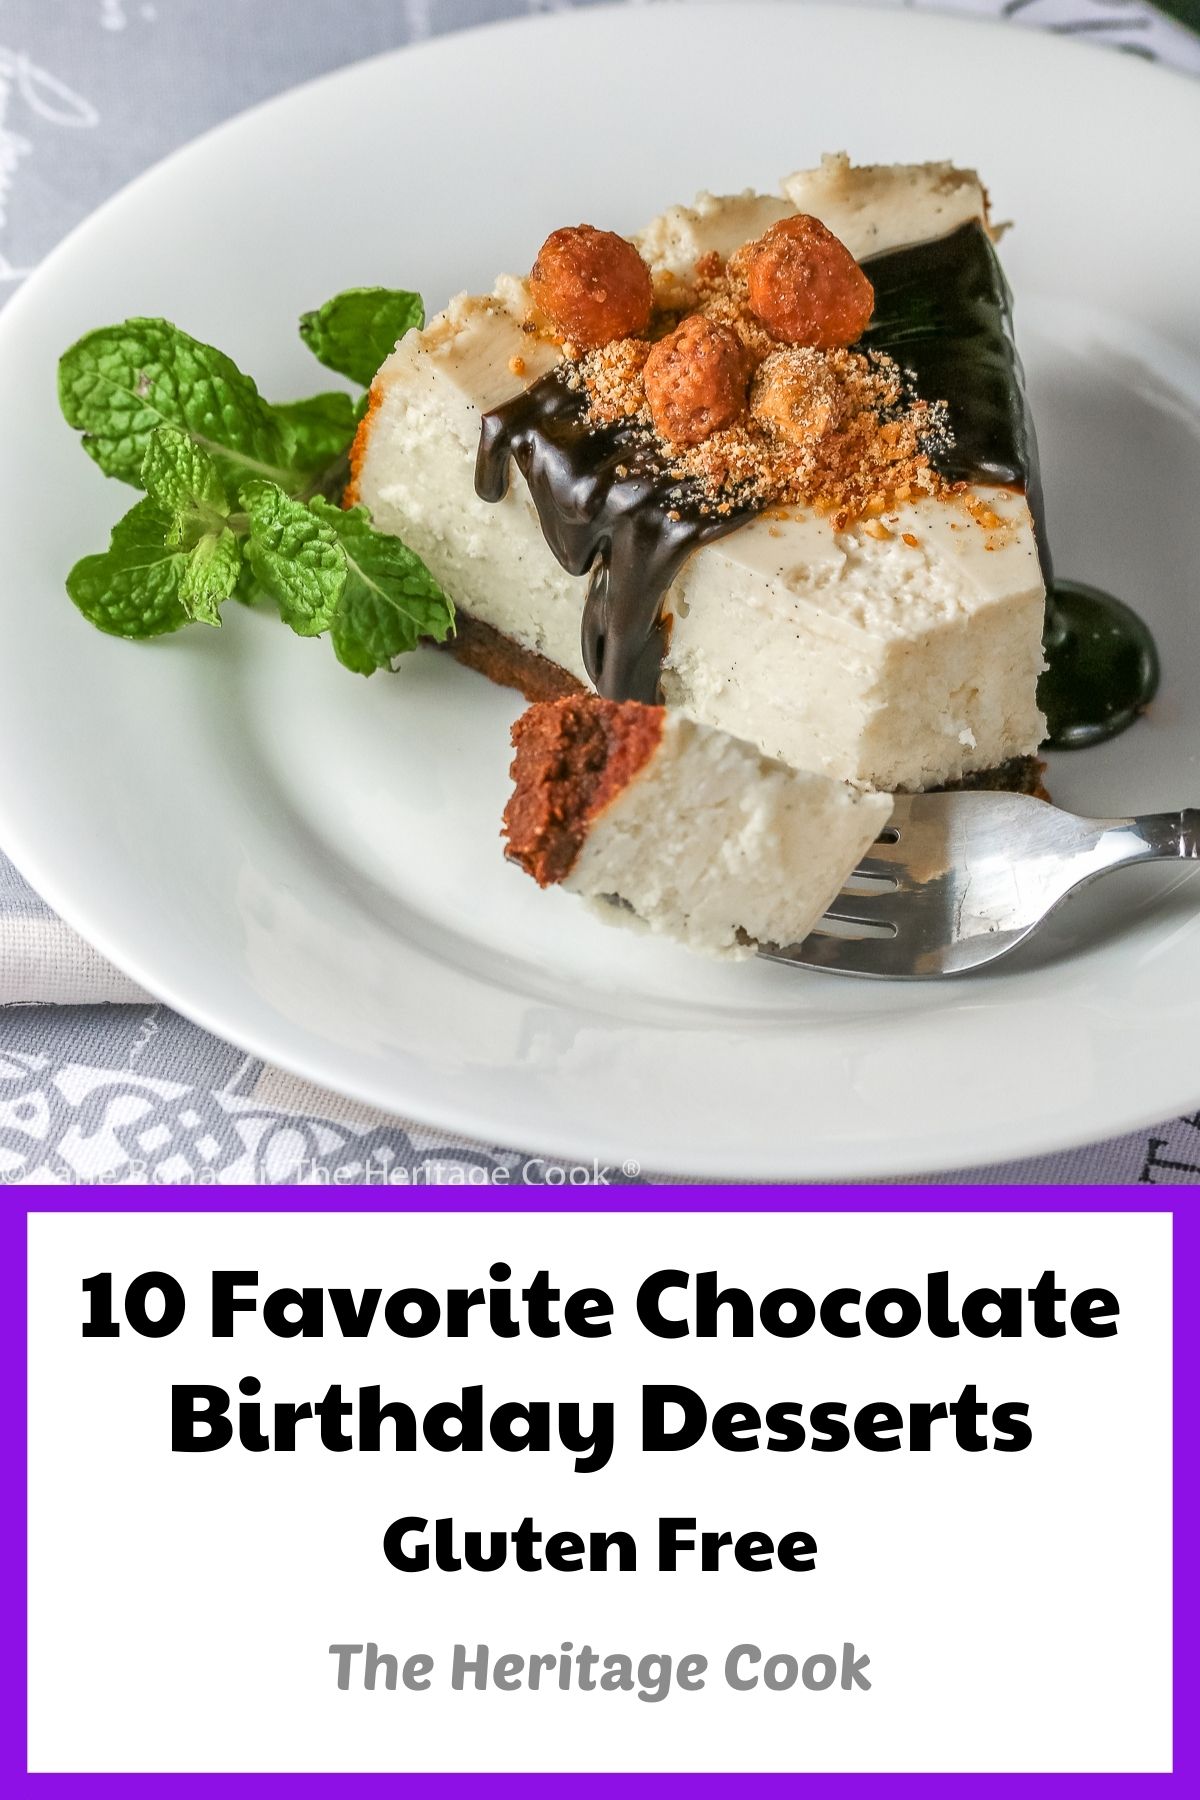 Ten Favorite Chocolate Birthday Desserts Recipes © 2022 Jane Bonacci, The Heritage Cook